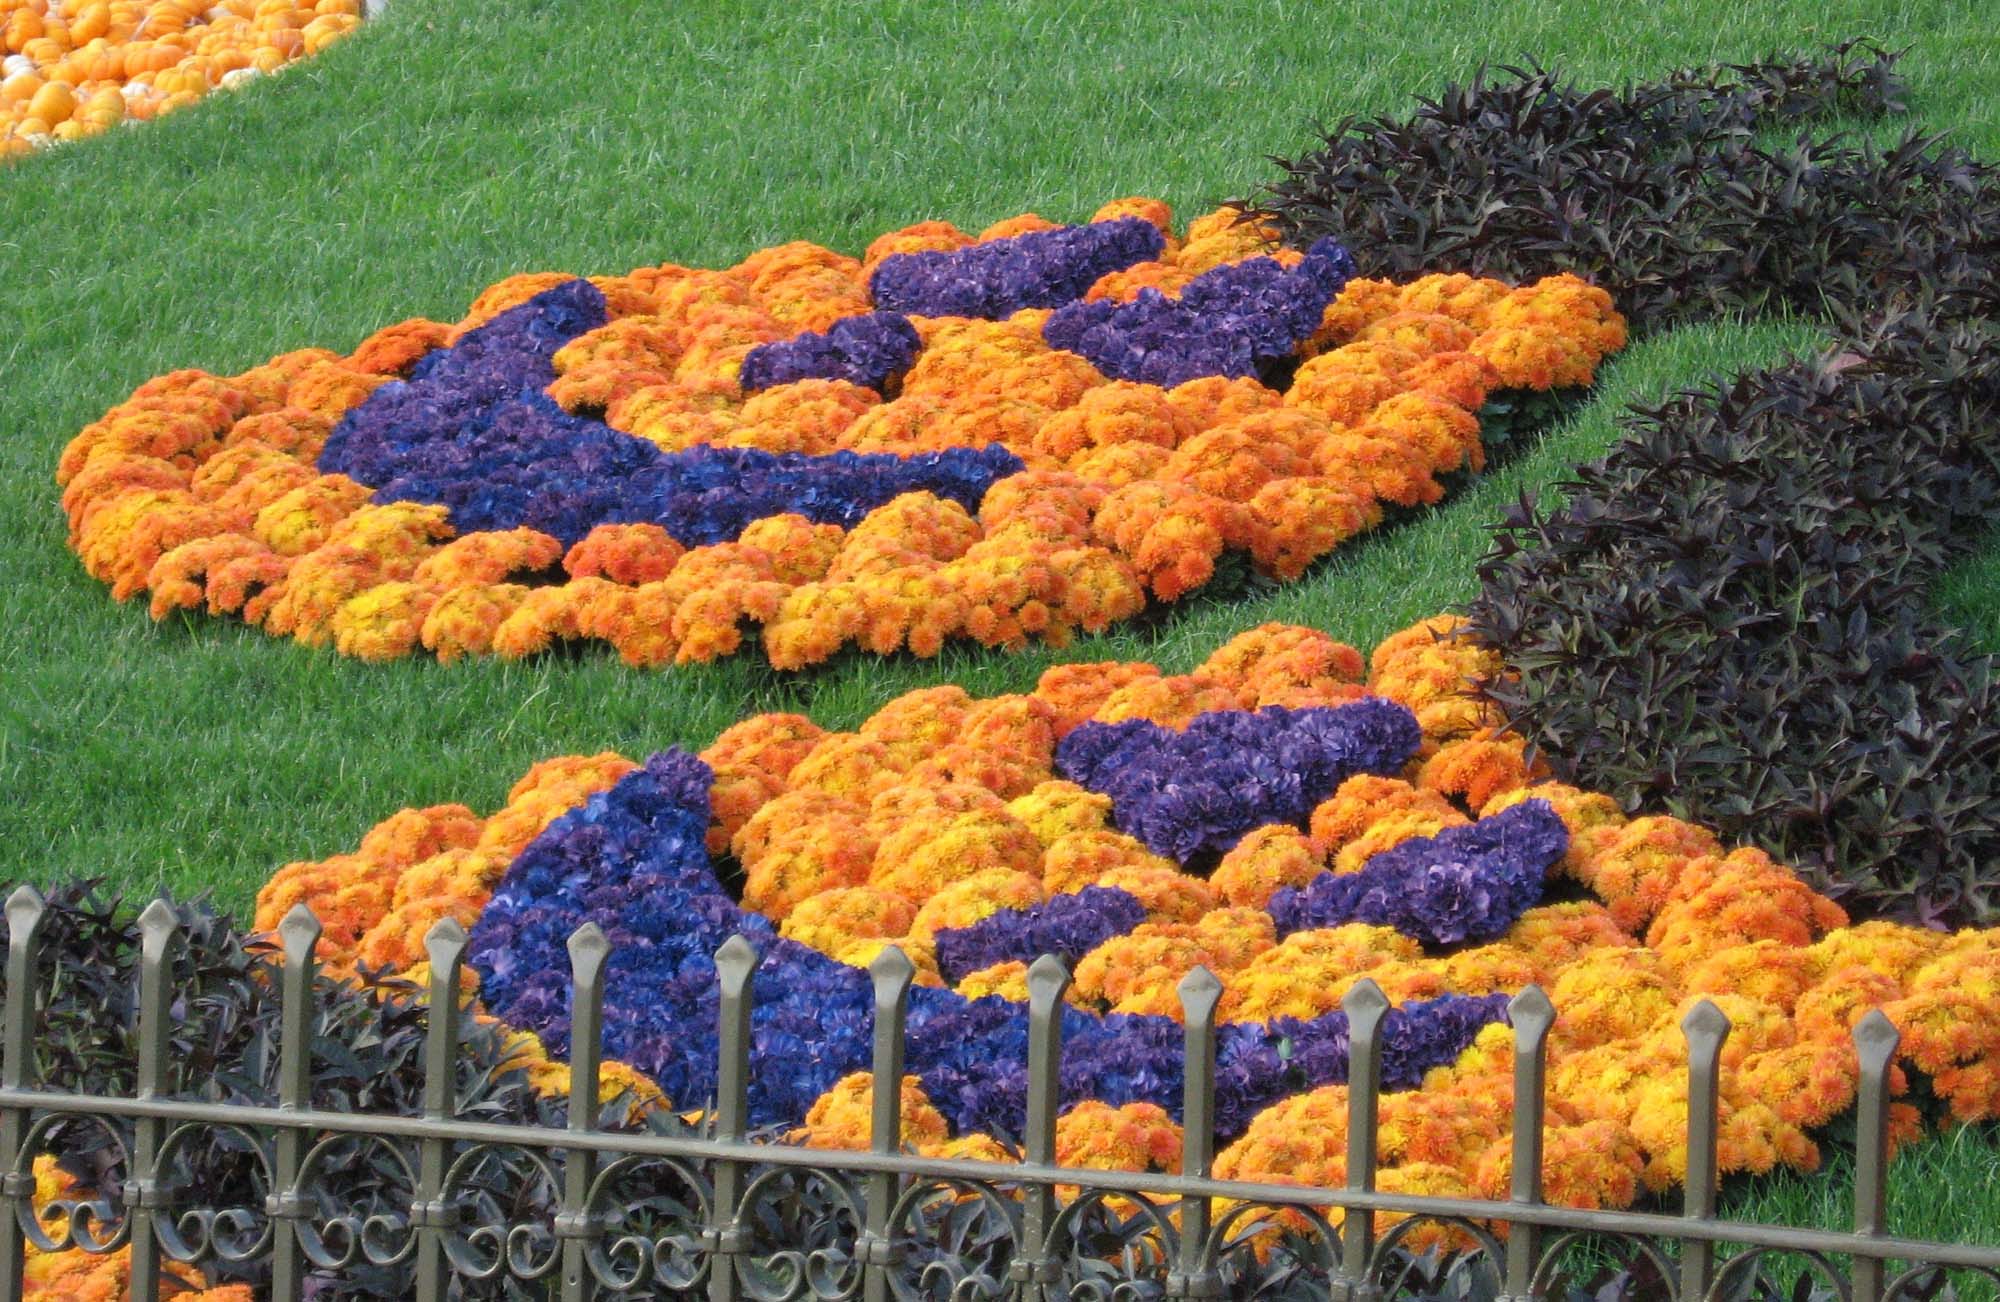 Disneyland - flowers in front of the Disneyland Railroad Station